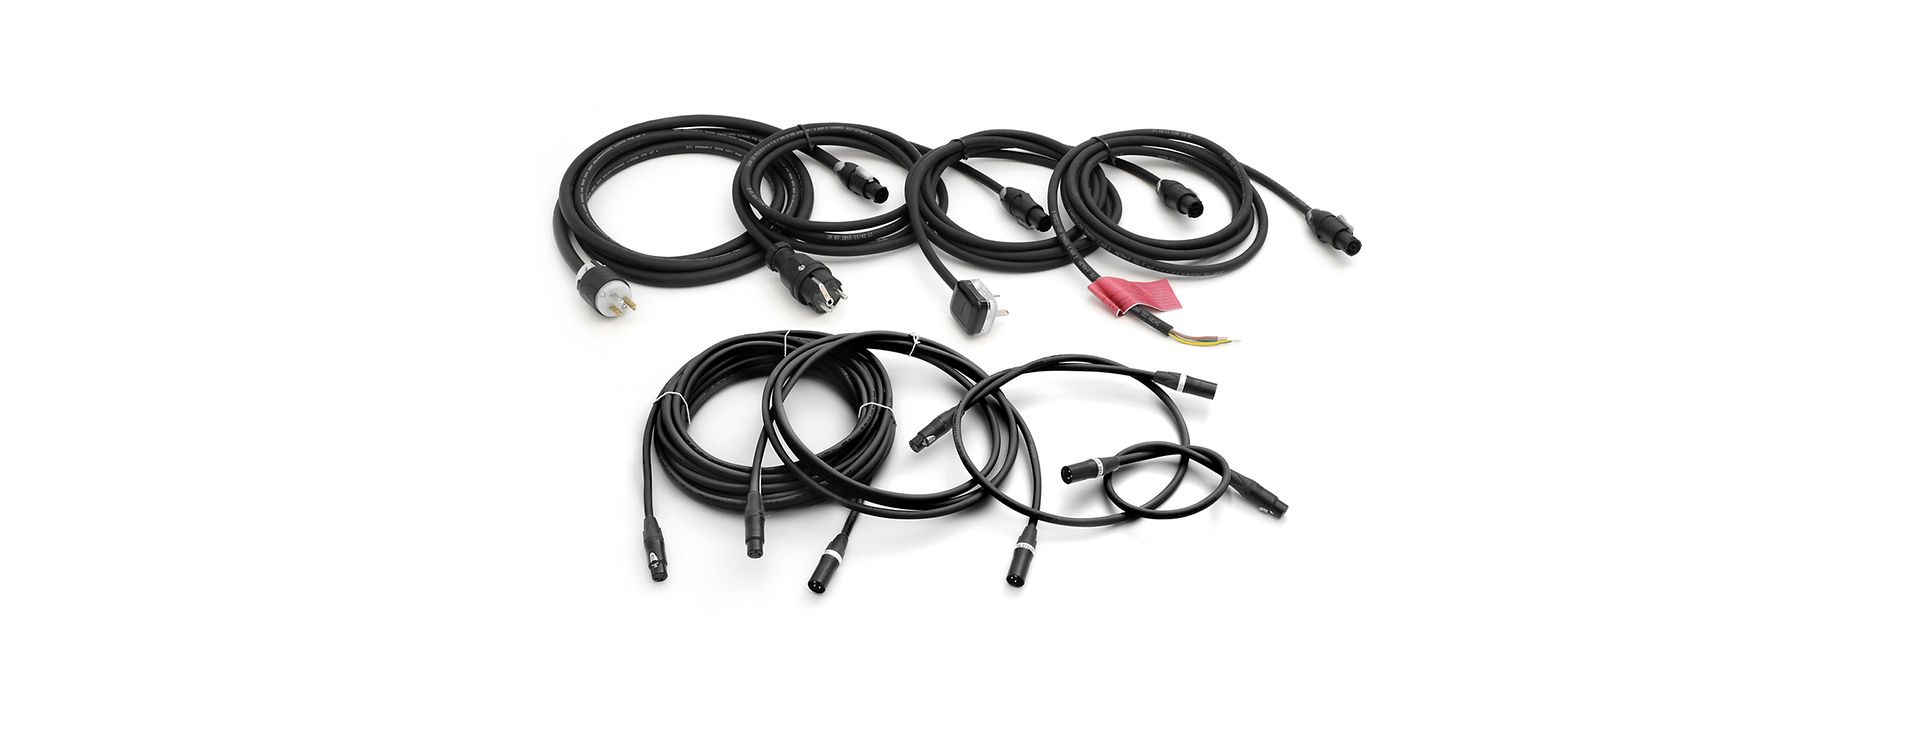 Matrix 4Pin DC Cable for Arri Alexa Mini / Amira 12V (60cm/24in) –  SmartSystem